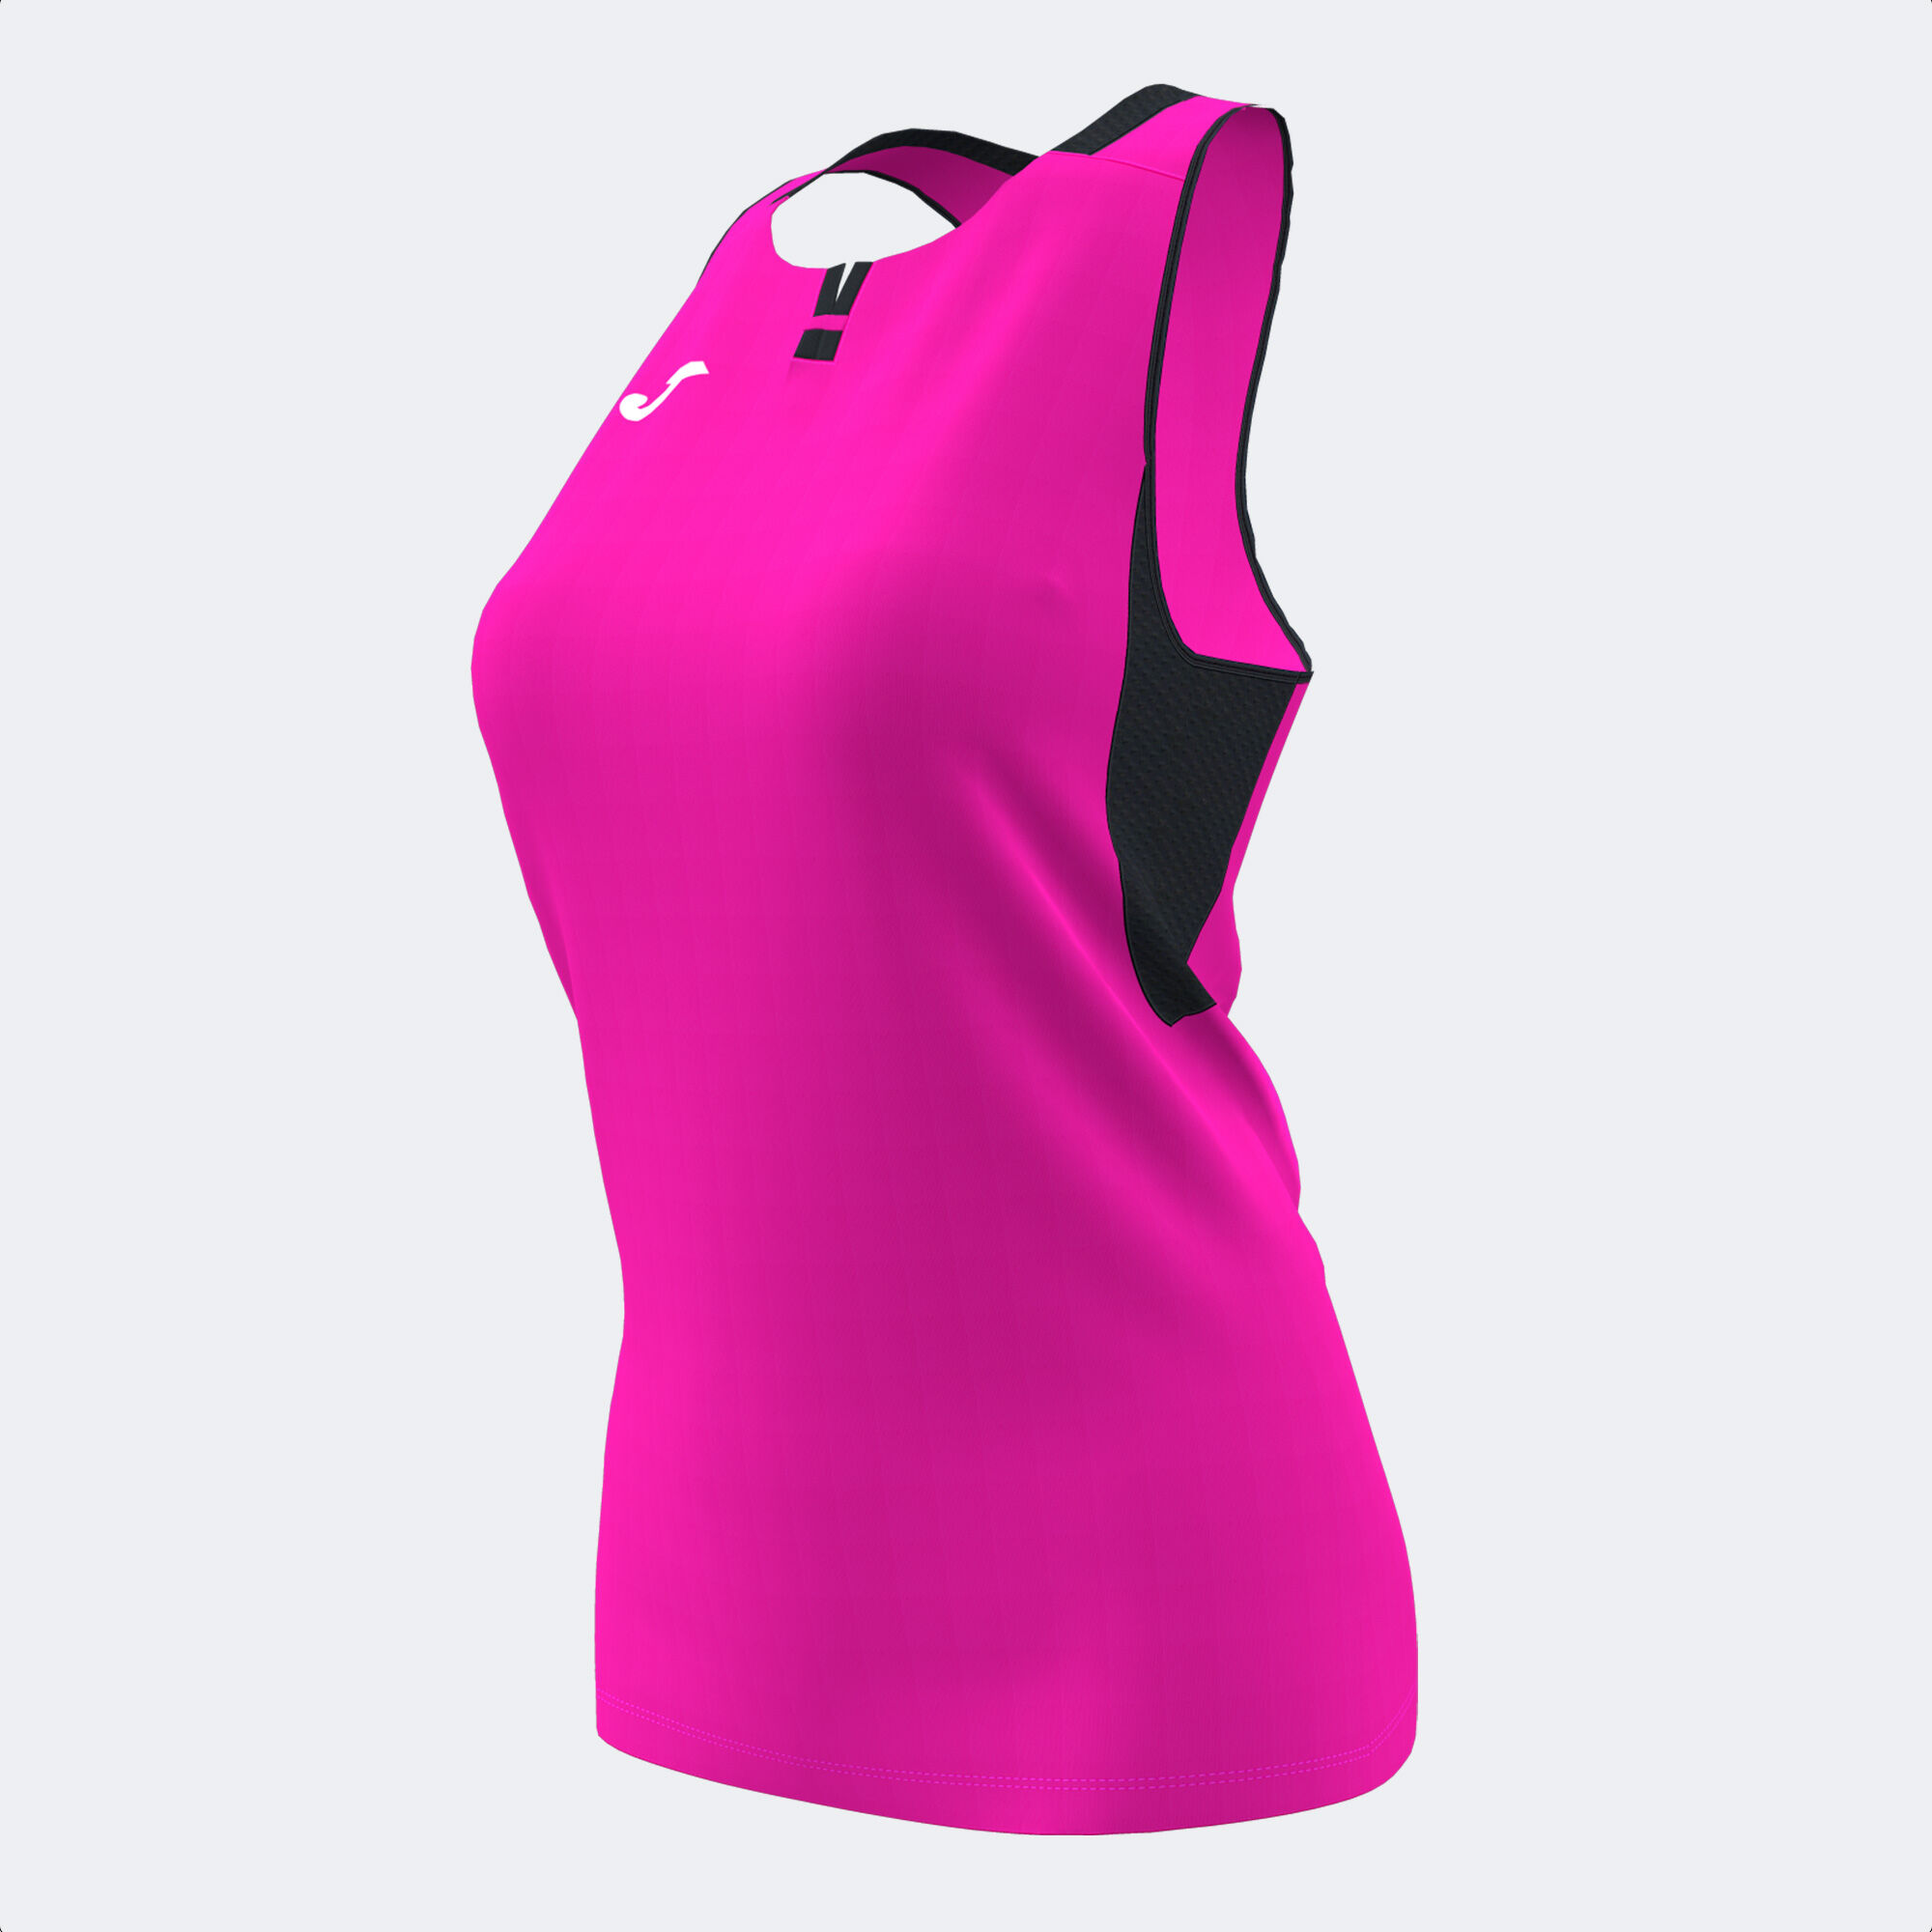 T-shirt de alça mulher Ranking rosa fluorescente preto